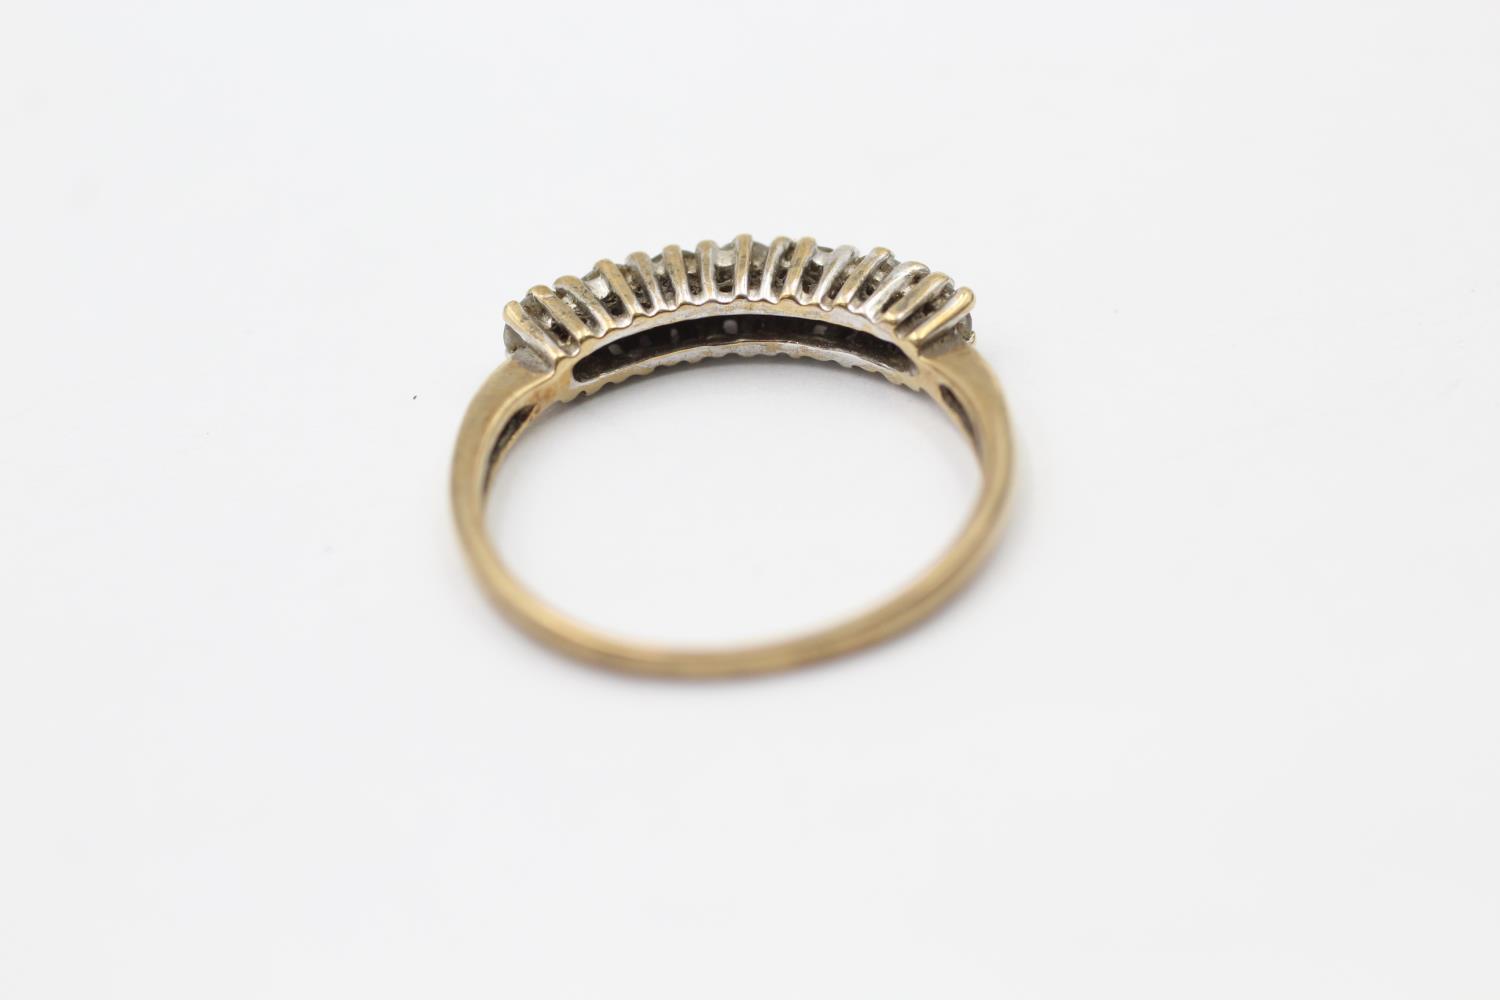 9ct gold vintage diamond dress ring (1.4g) size L - Image 5 of 5